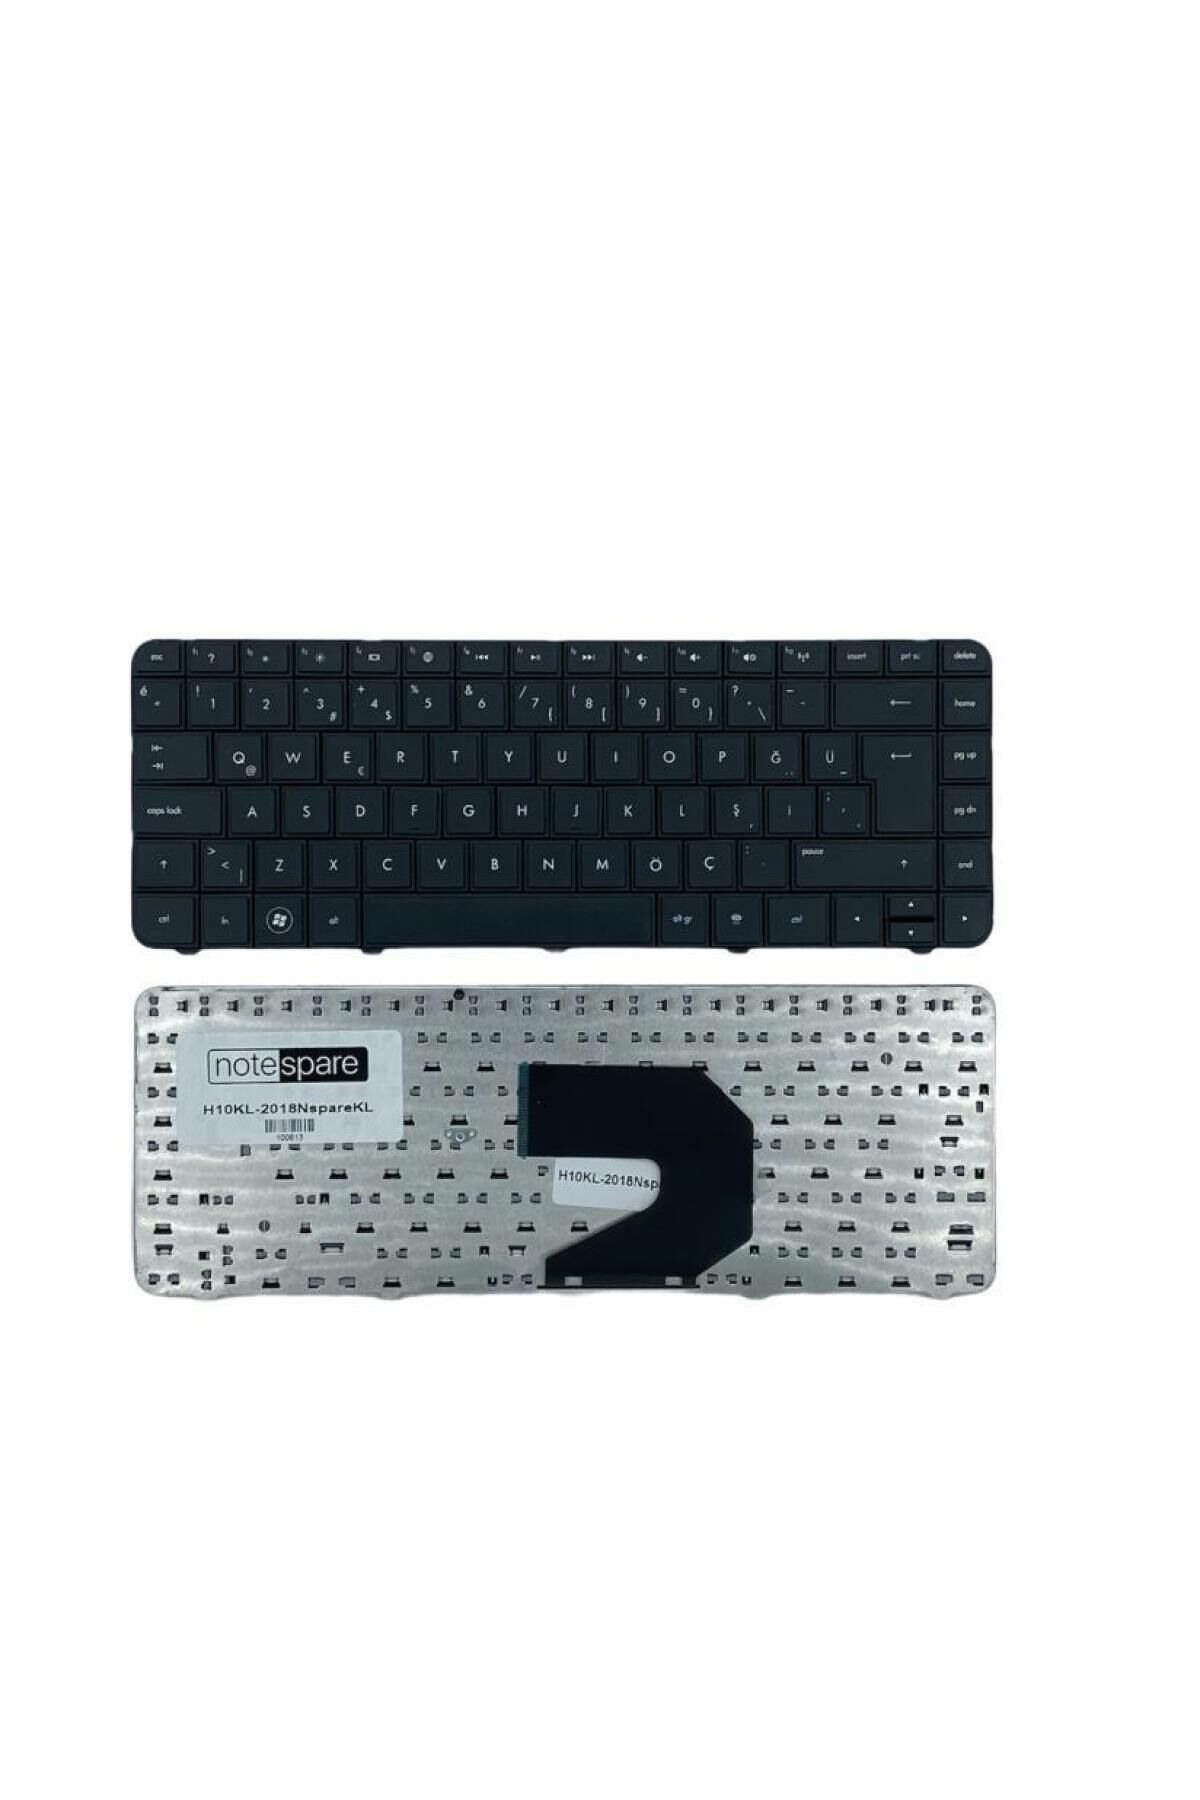 Hp ile Uyumlu 630 (LH384EA), 631 (LH416EA) Notebook Klavye Siyah TR